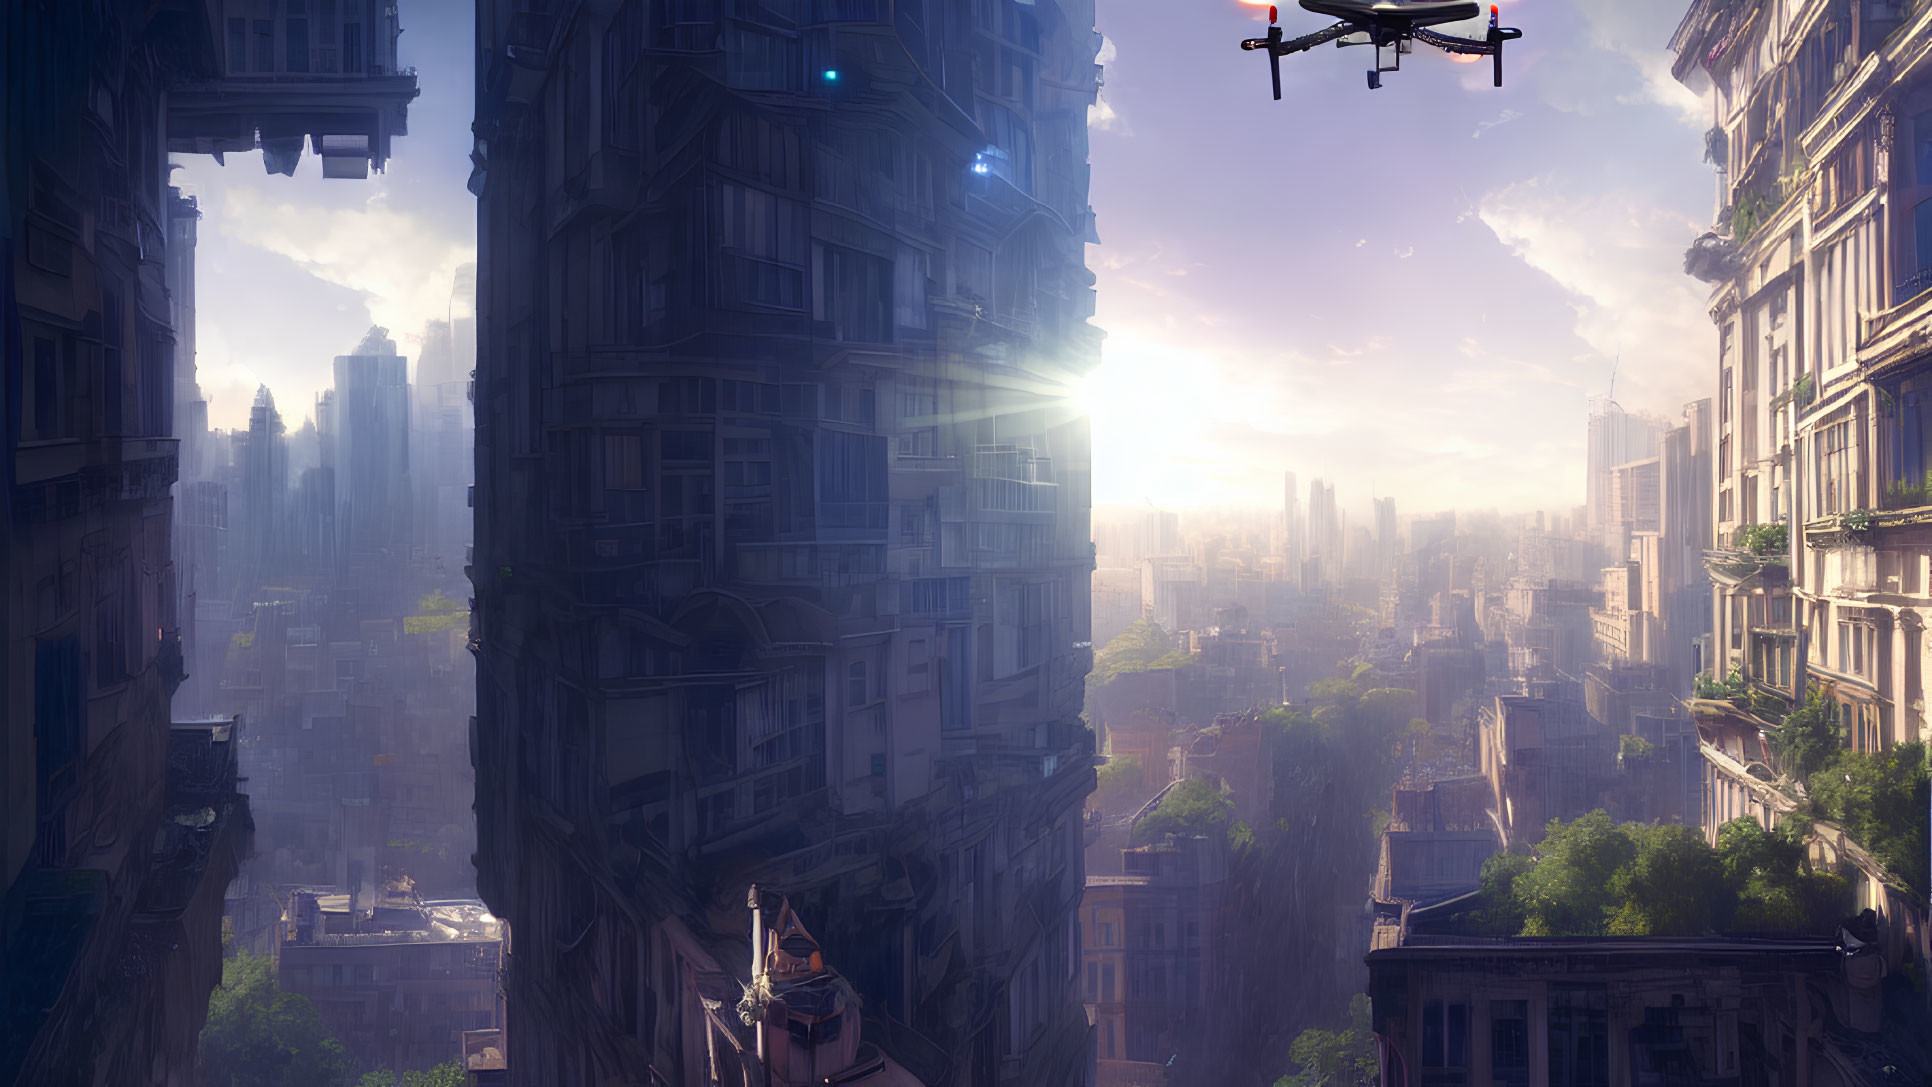 Sunrise illuminates futuristic cityscape with high-rise buildings and flying drone.